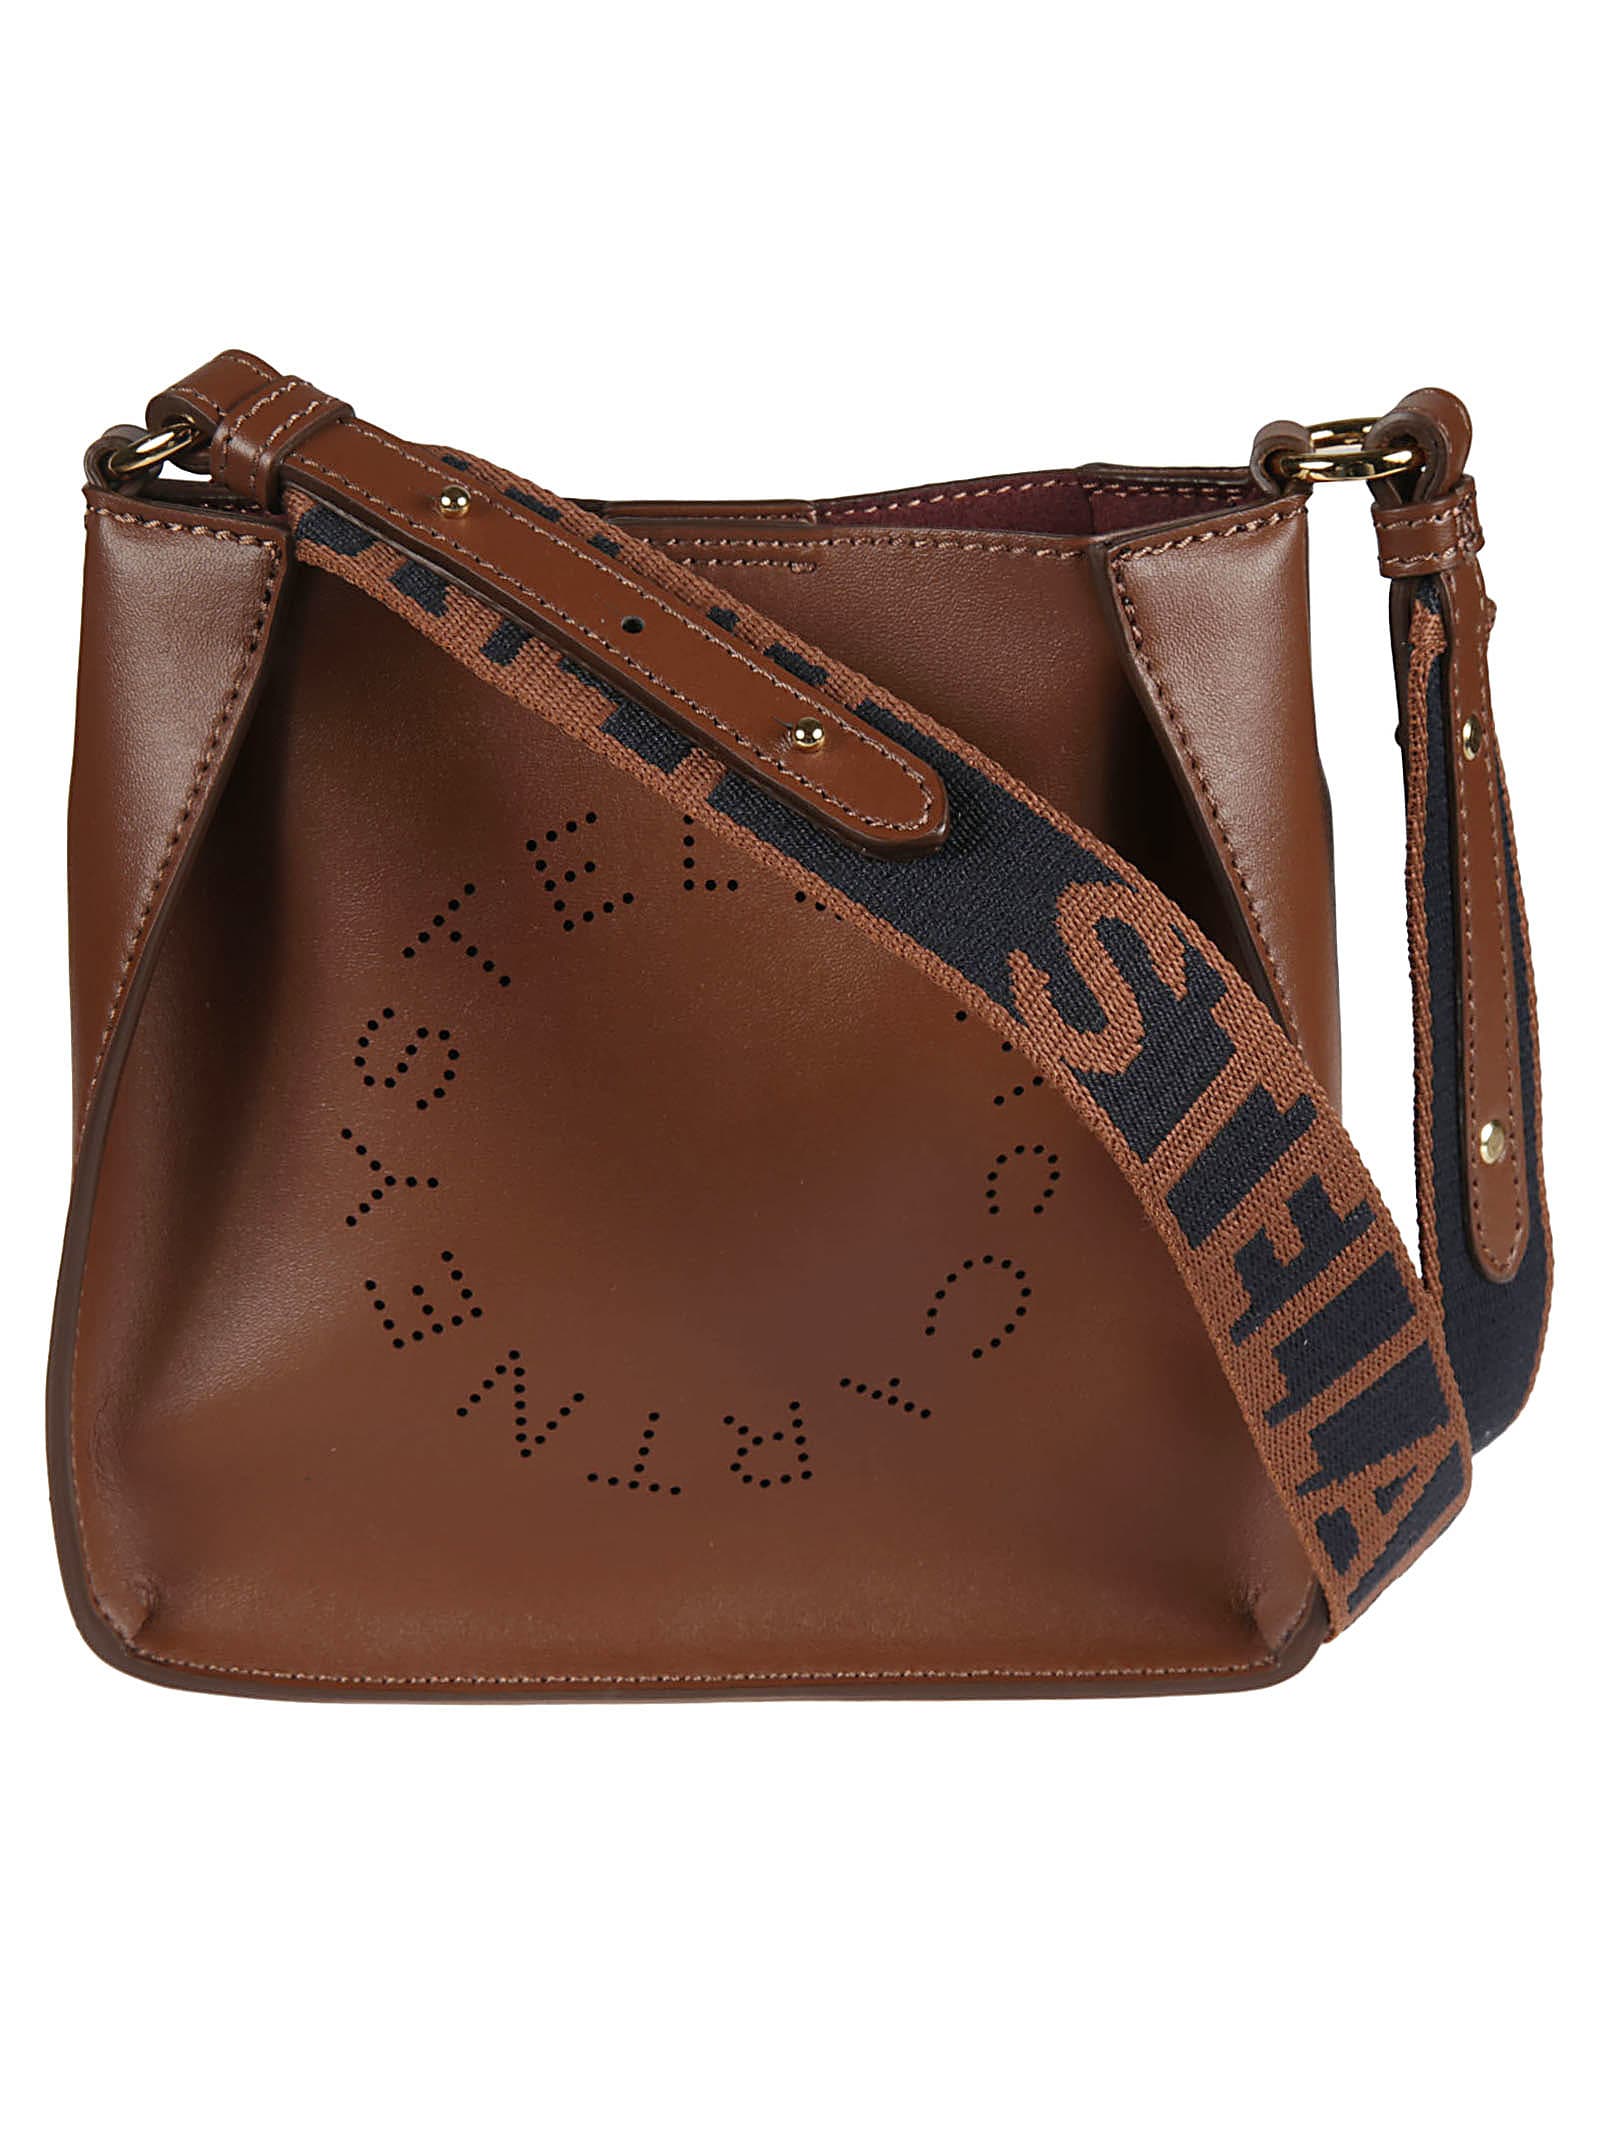 Stella McCartney Hobo Mini Shoulder Bag